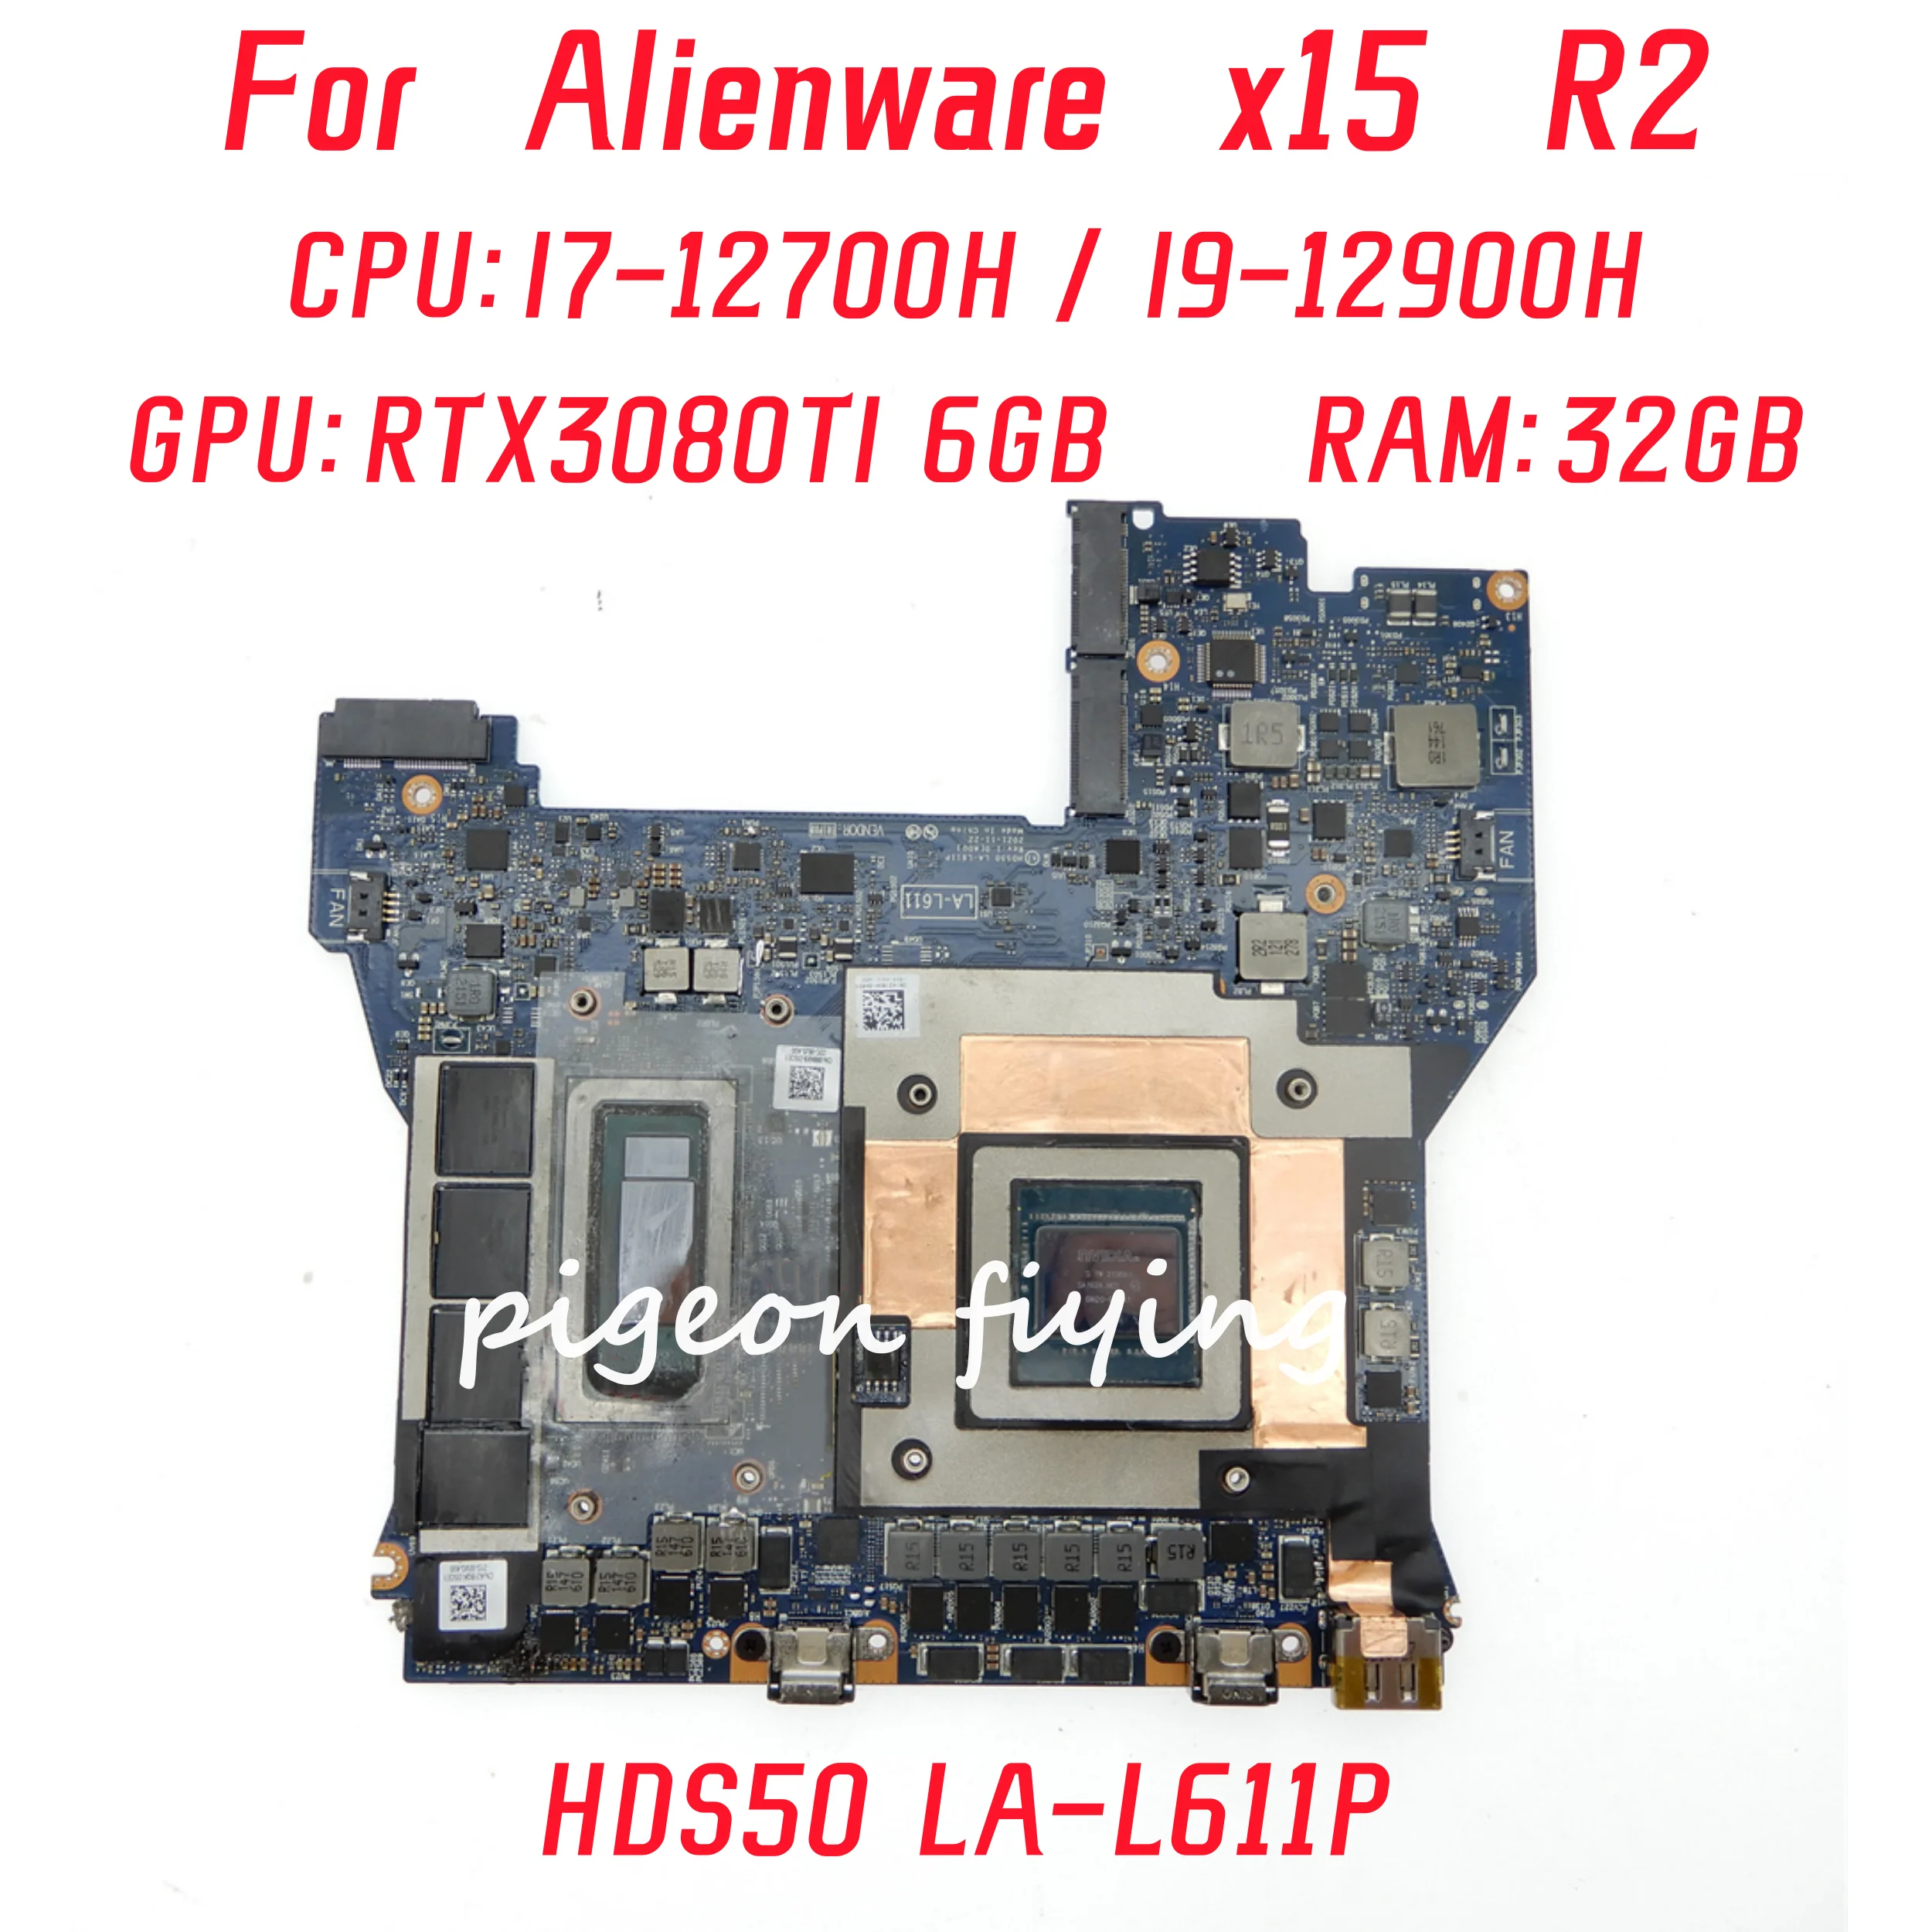 

HDS50 LA-L611P Mainboard For Dell Alienware x15 R2 Laptop Motherboard CPU: I7-12700H I9-12900H GPU: RTX3080TI RAM:32GB Test OK